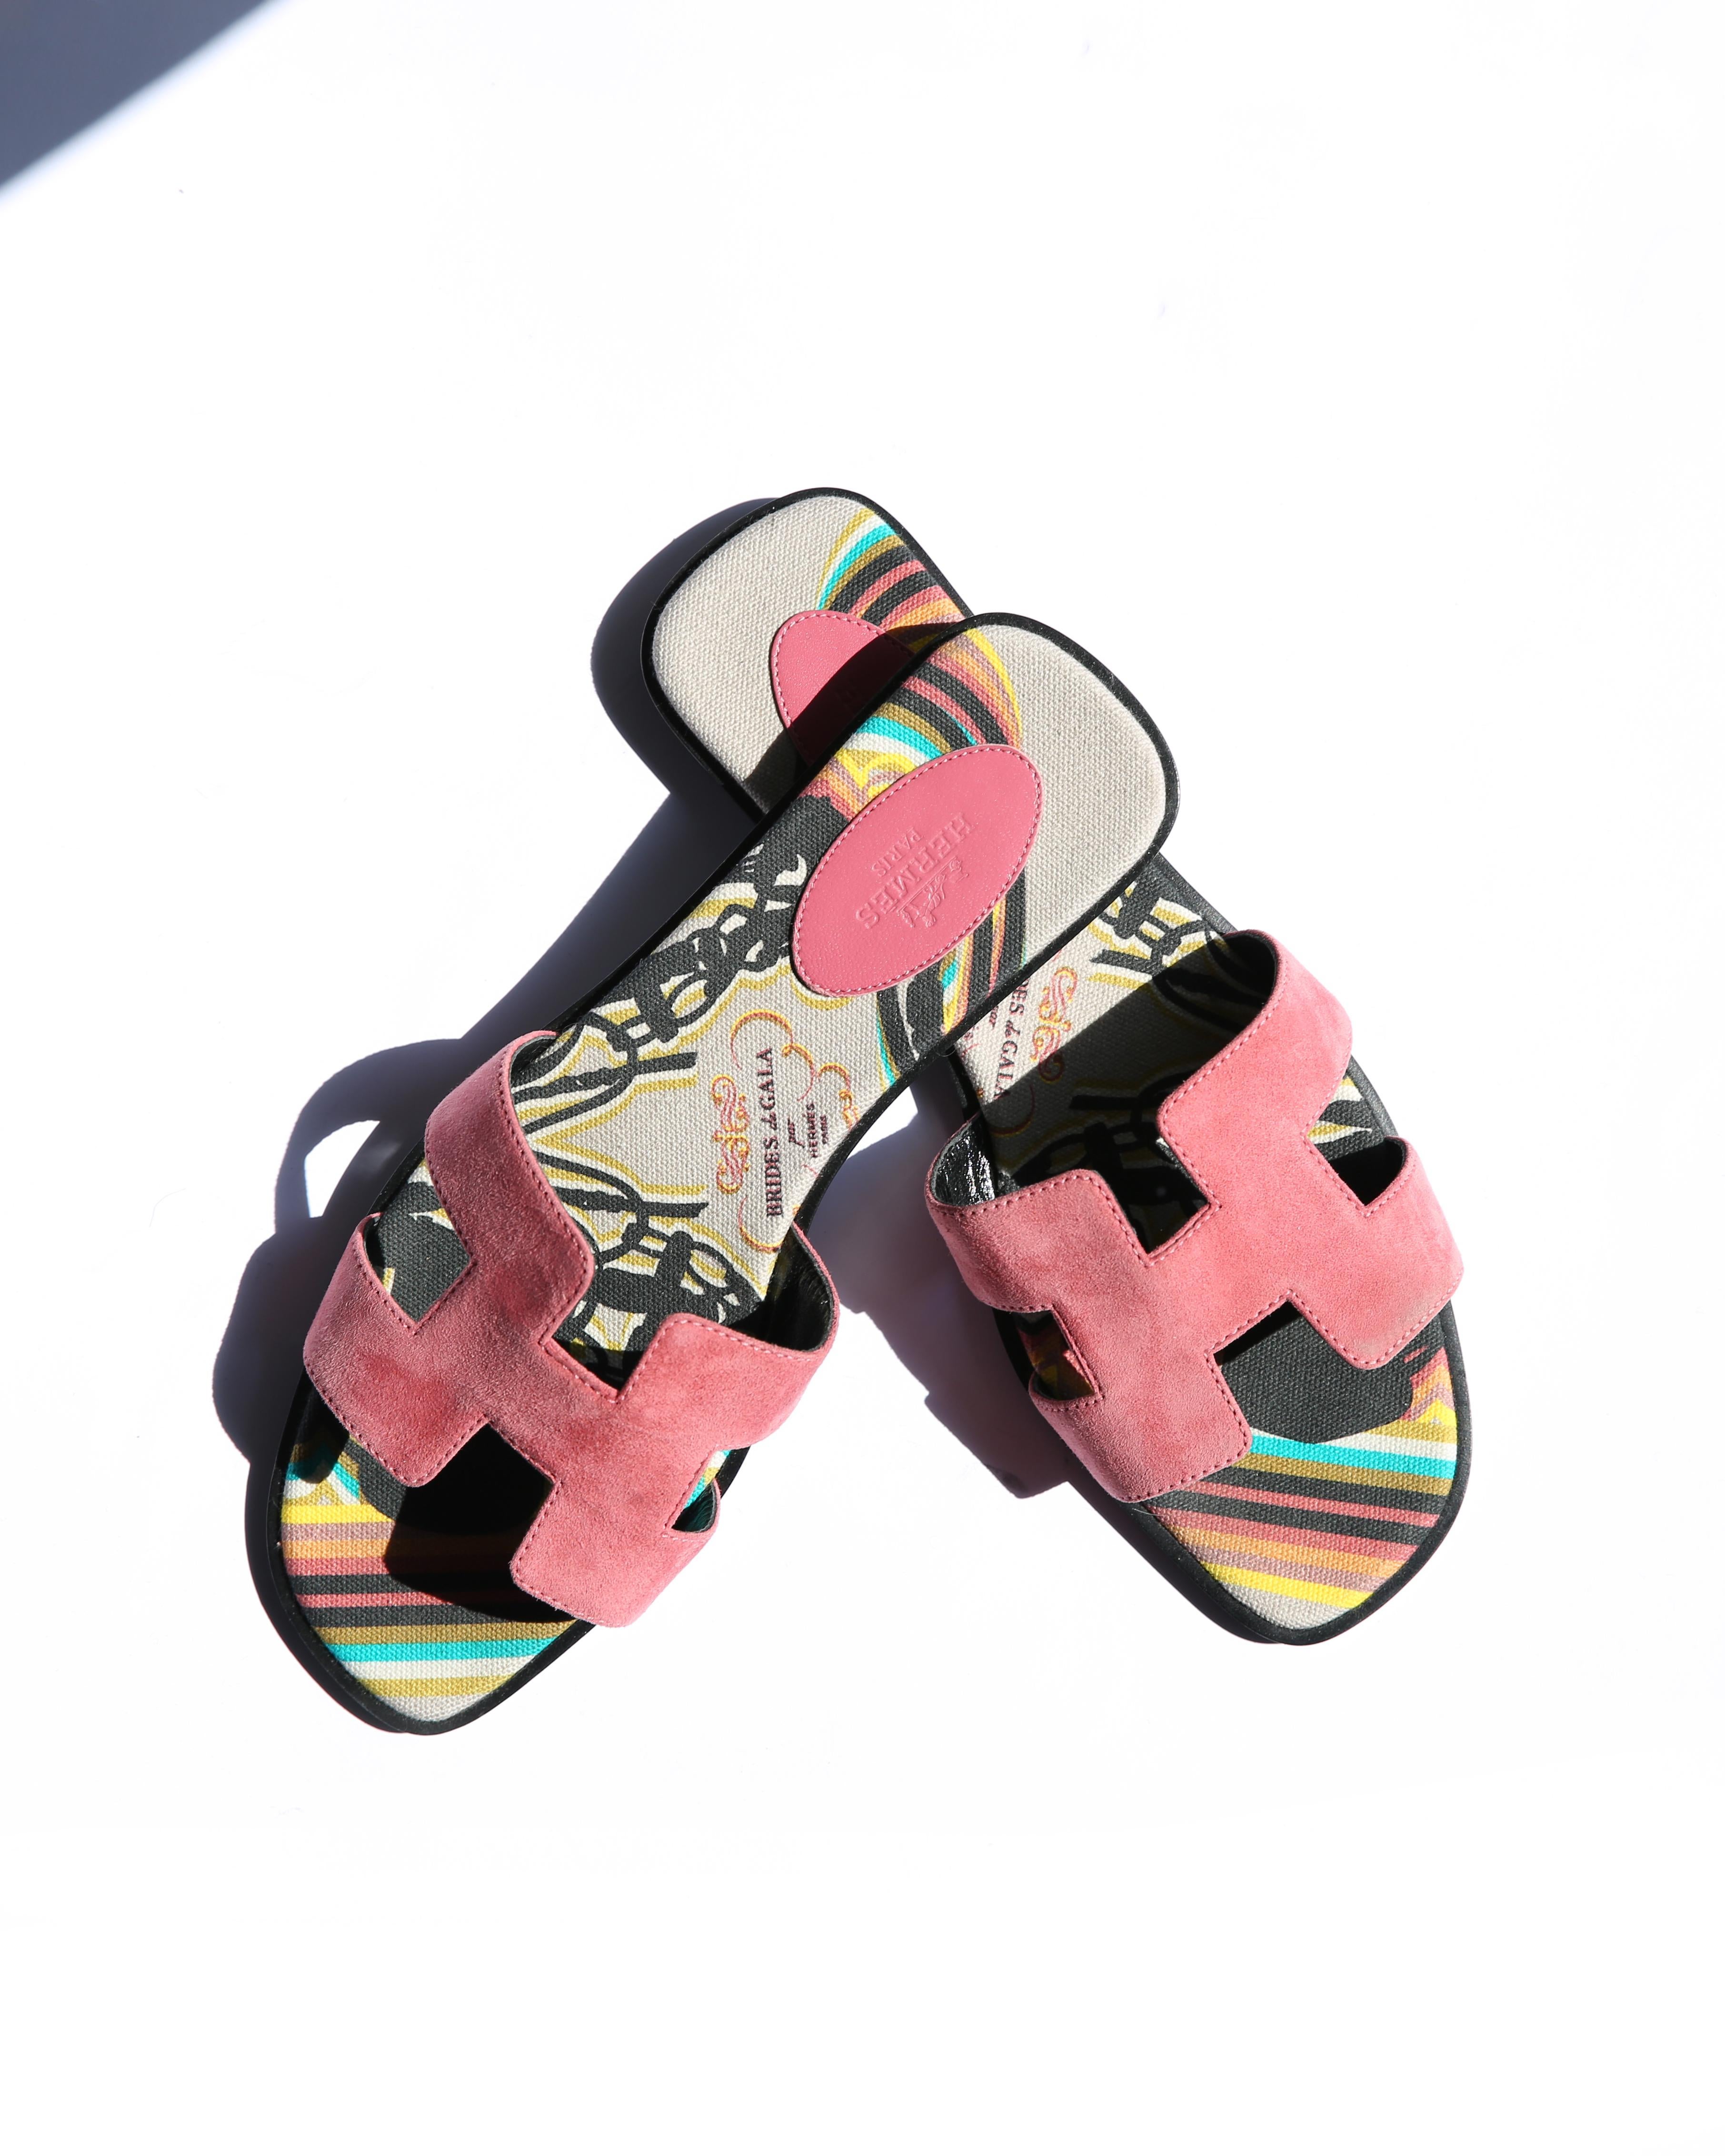 flip flops designed by art with jenny k